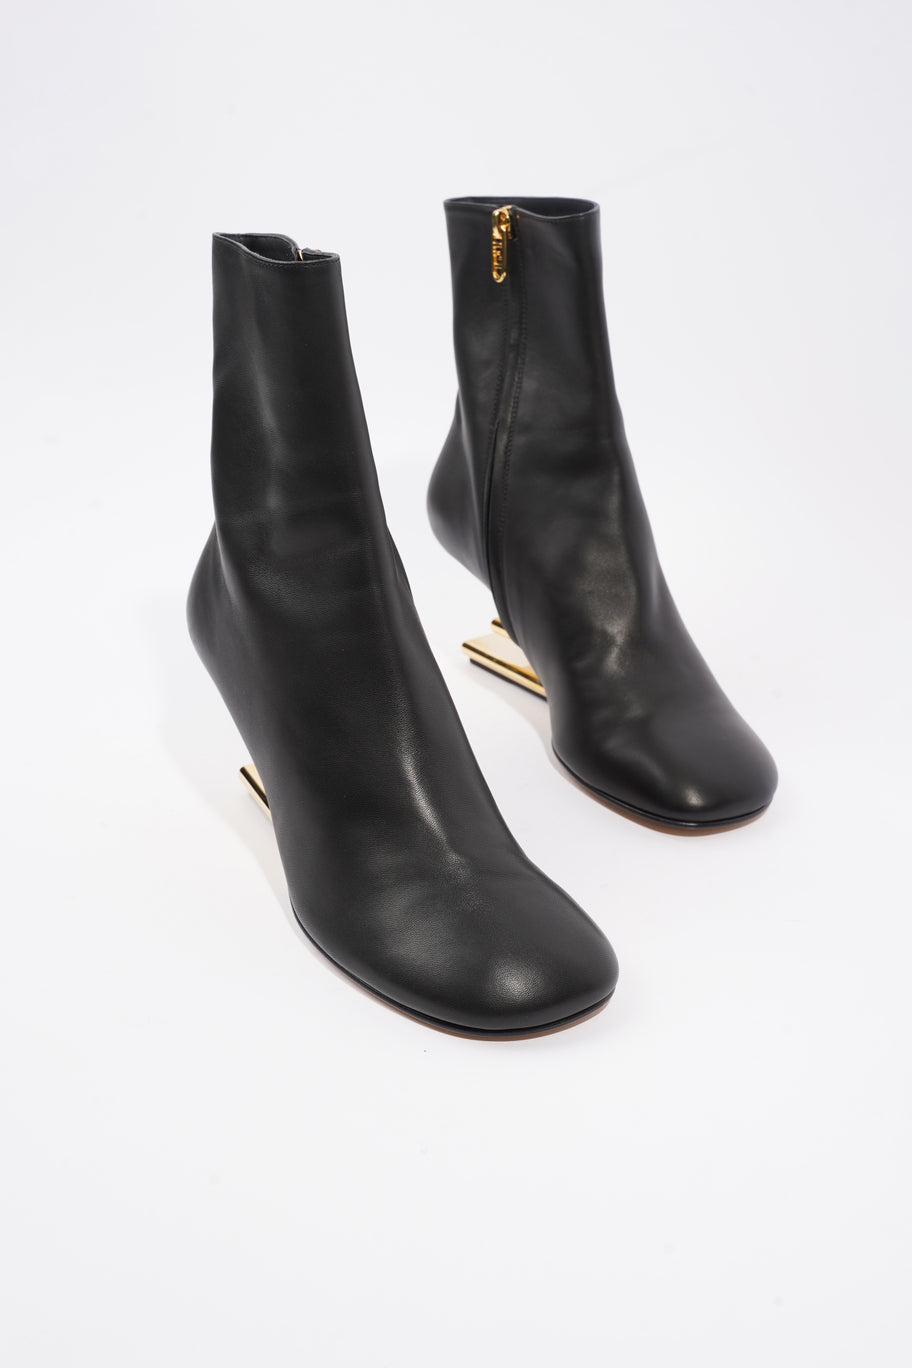 Fendi First Boots Black Leather EU 39 UK 6 Image 2